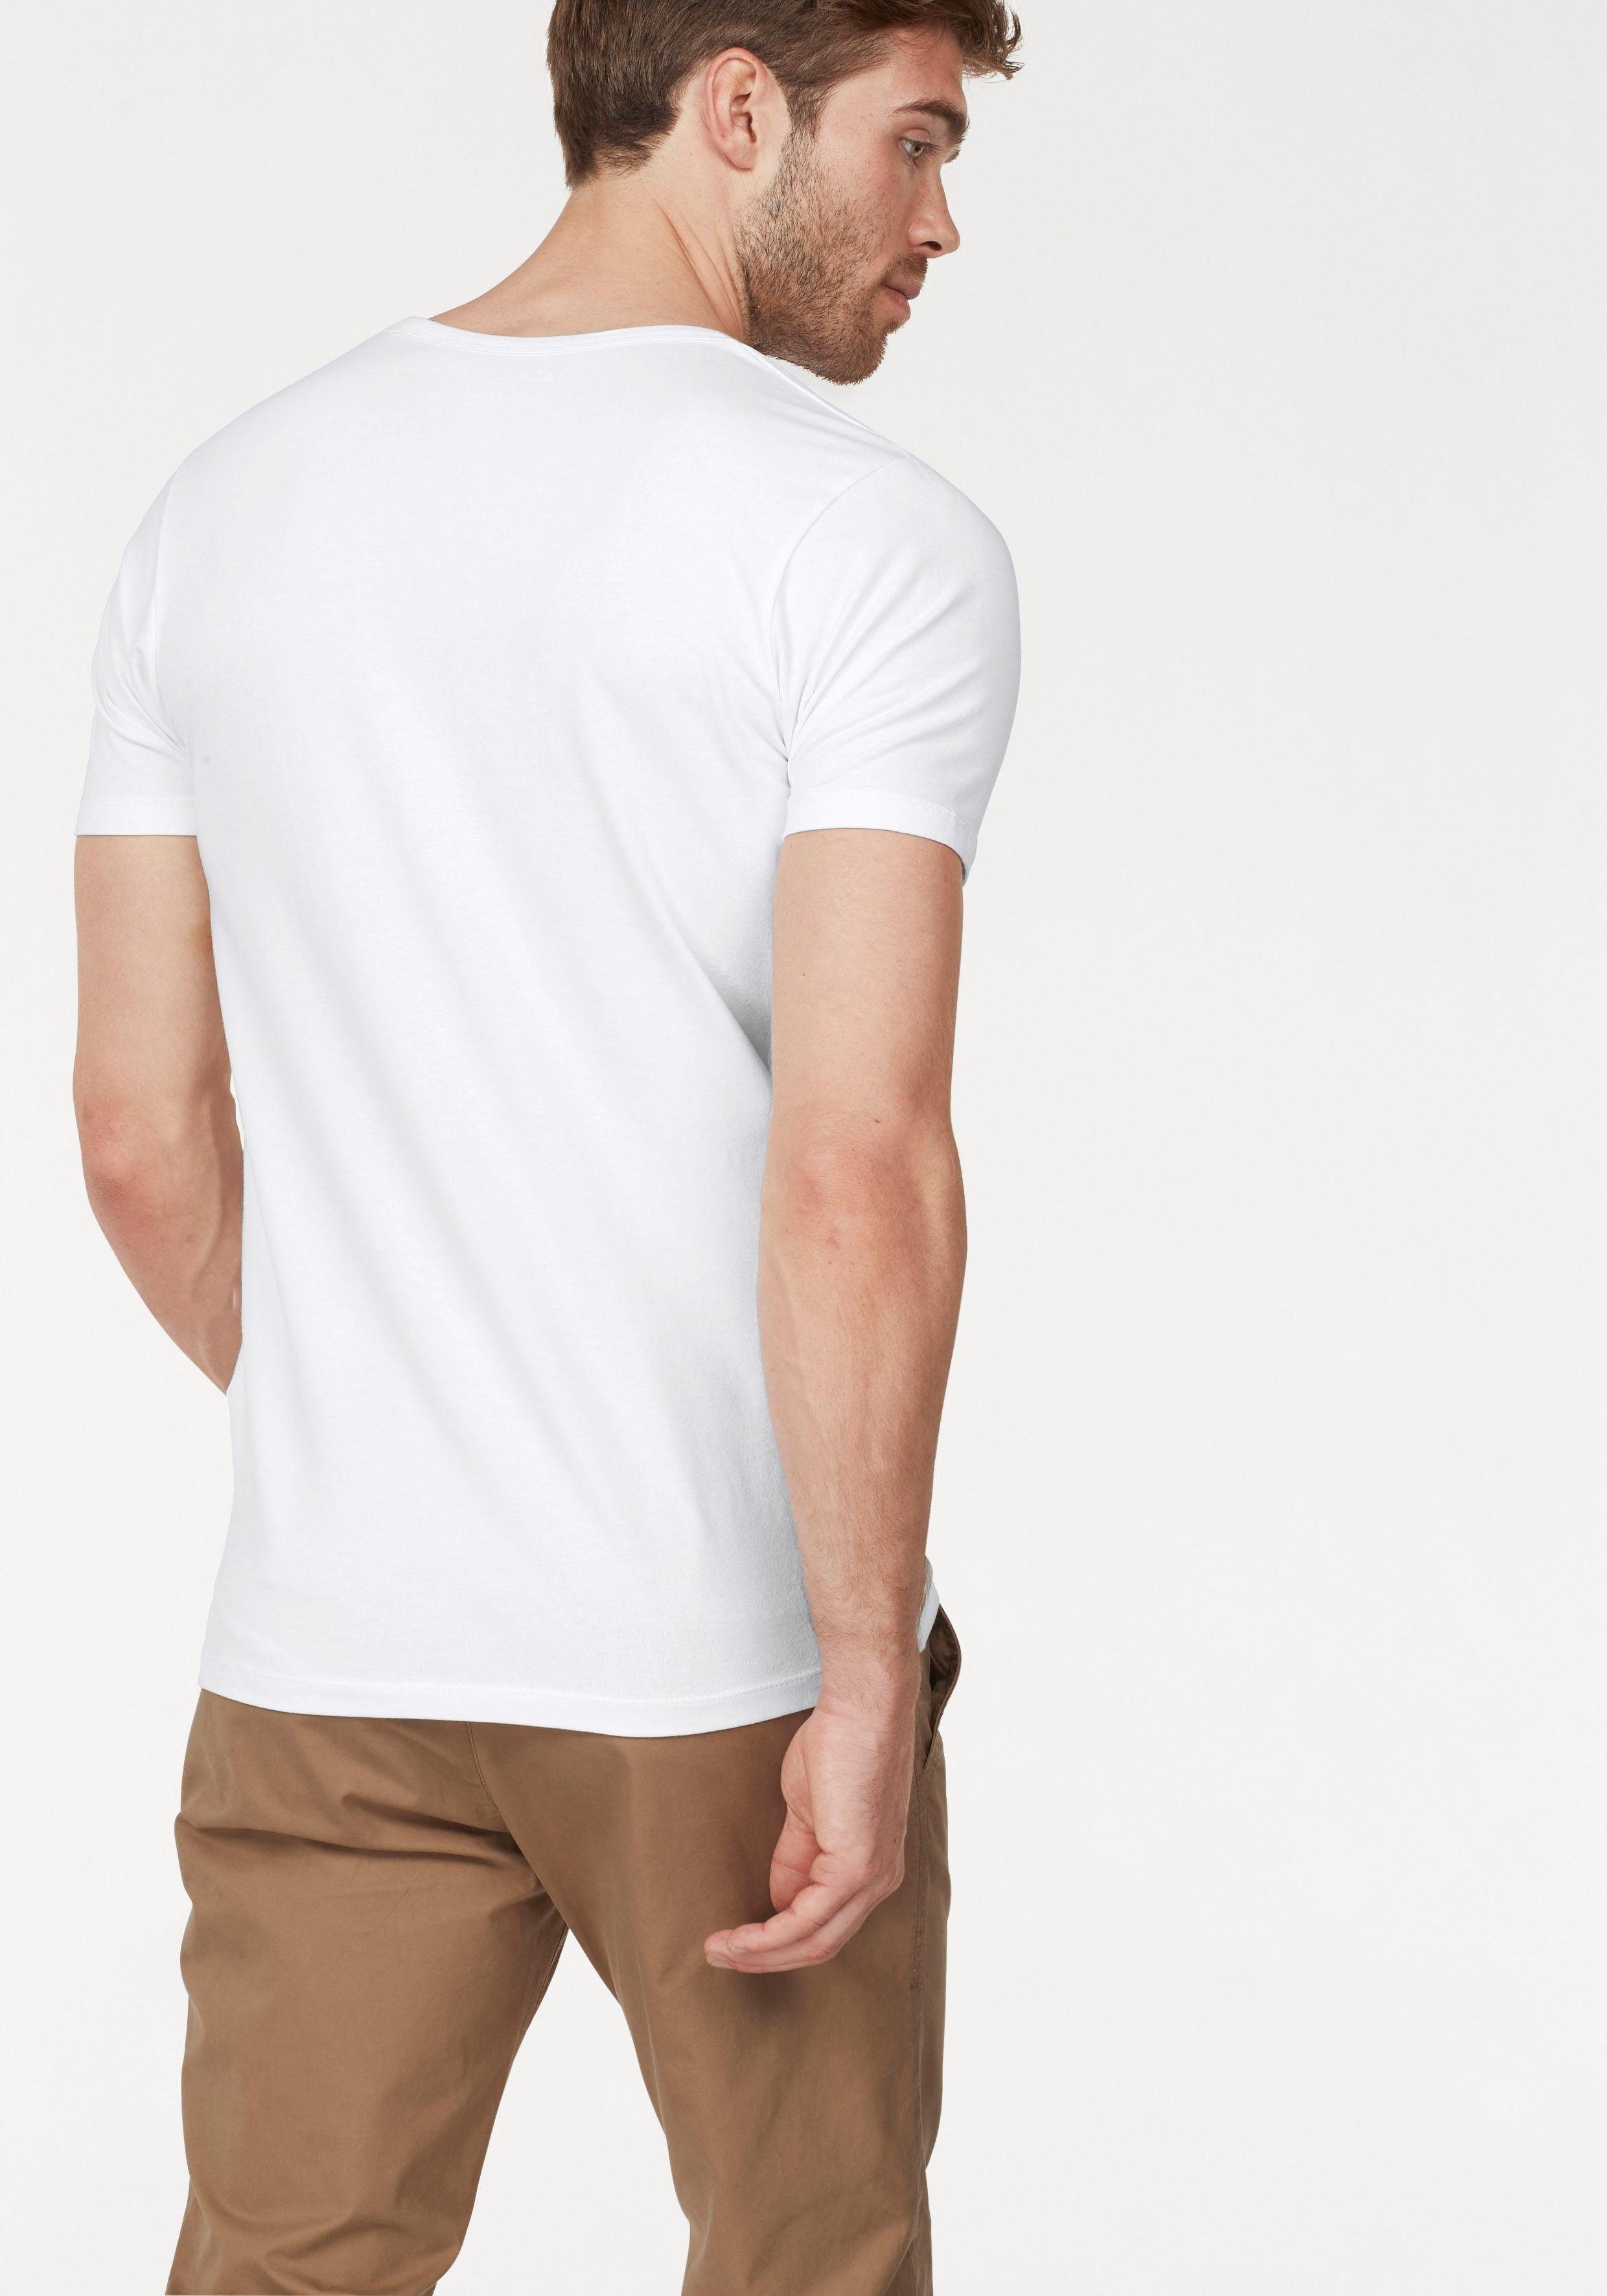 Jones V-NECK BASIC V-Ausschnitt mit TEE T-Shirt & white SLIM- Jack FIT